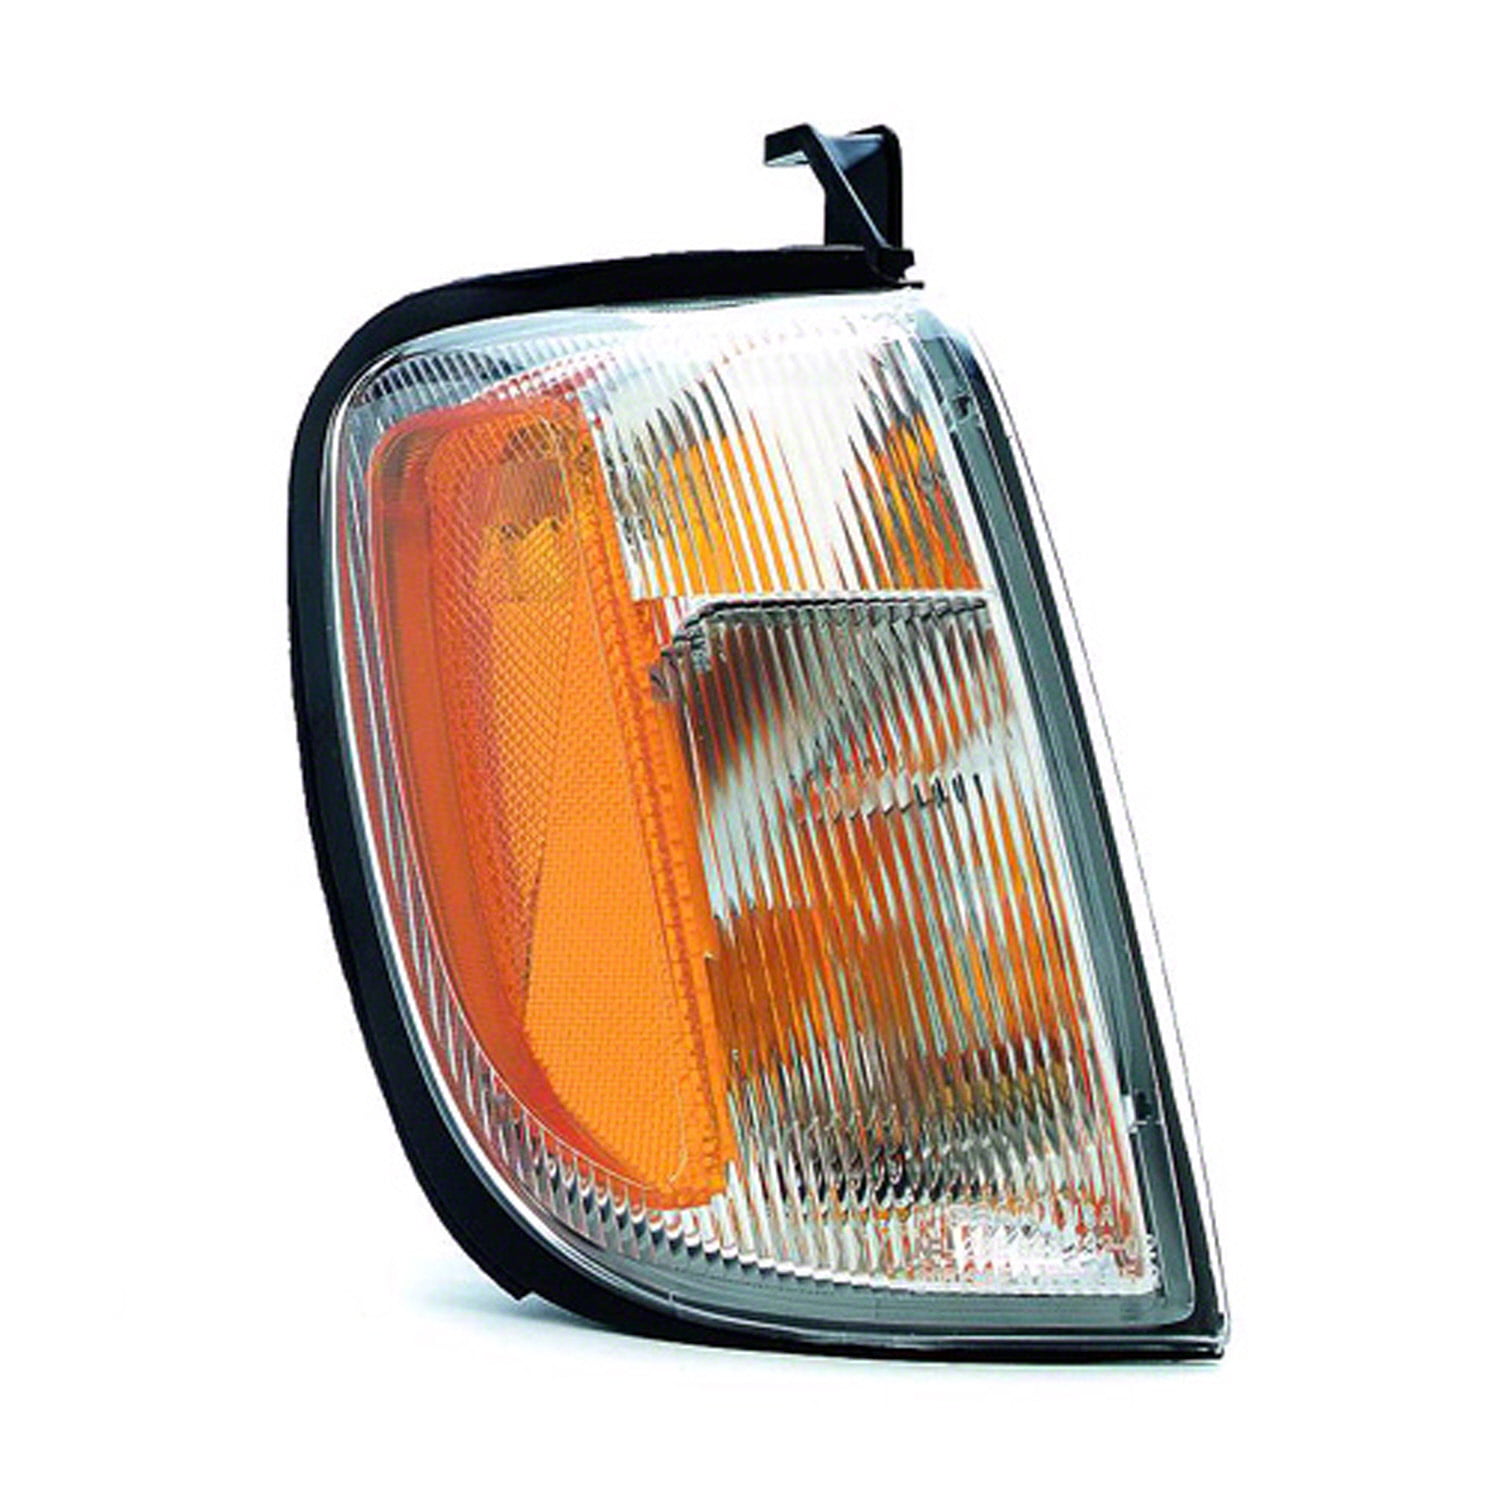 Passengers Park Signal Front Marker Light Lamp Lens Replacement for Nissan Pickup Truck SUV B613041G02 AutoAndArt 